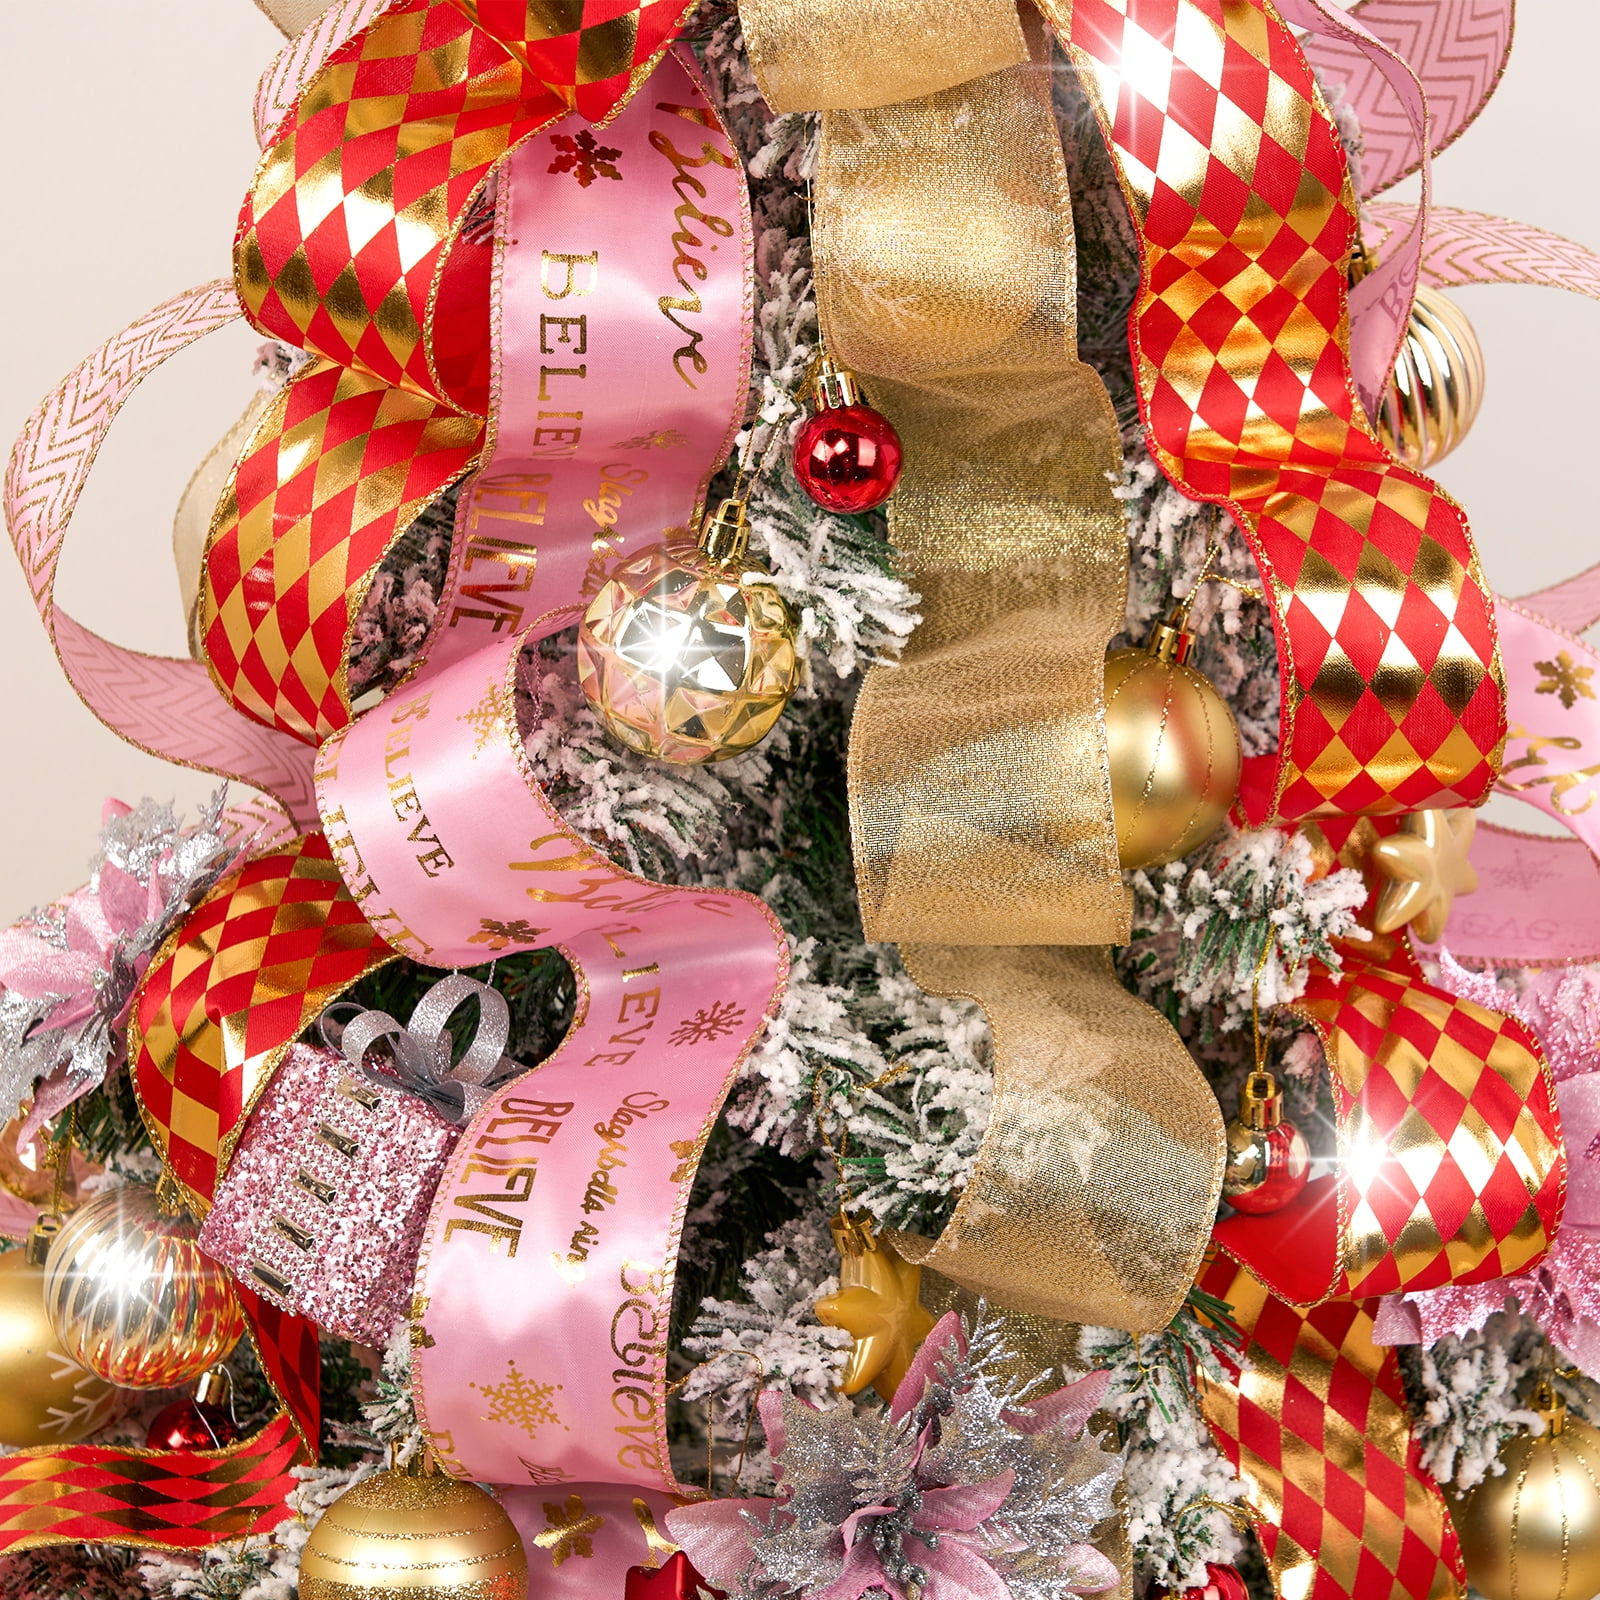 Decorative Red Satin Christmas Tree Ribbon Stock Illustration 317728472